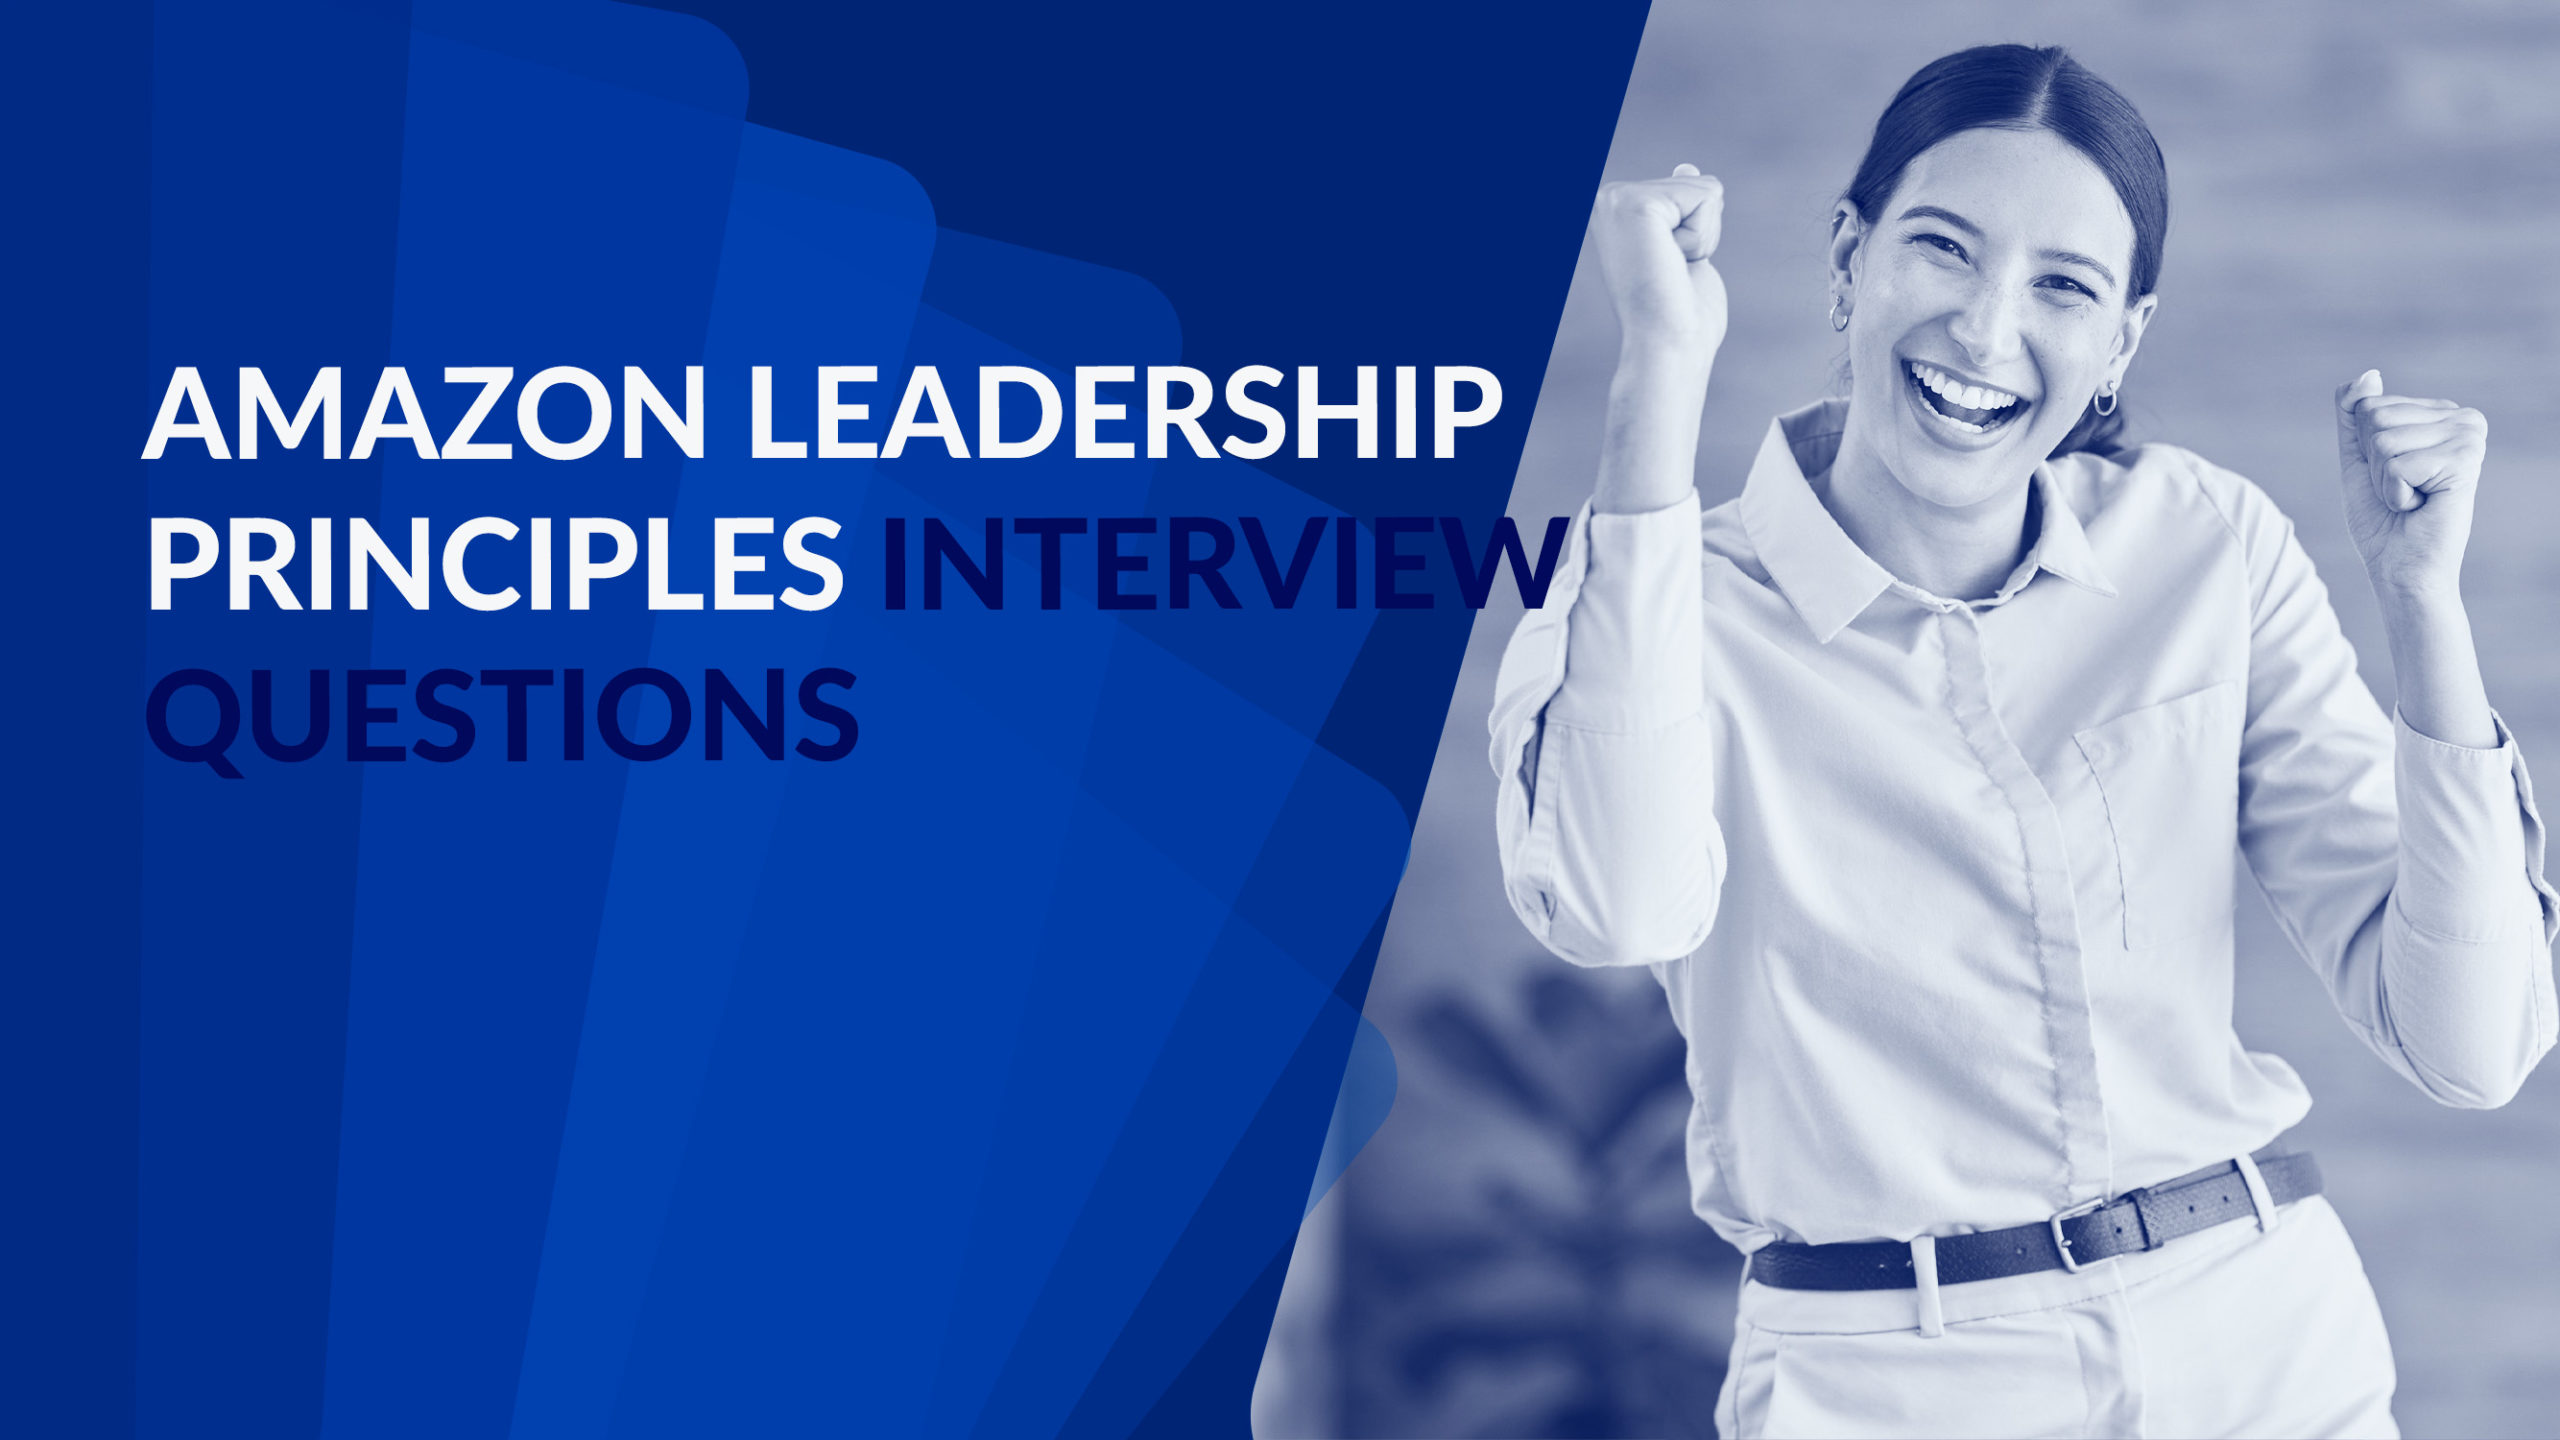 Amazon Leadership Principles Interview Questions